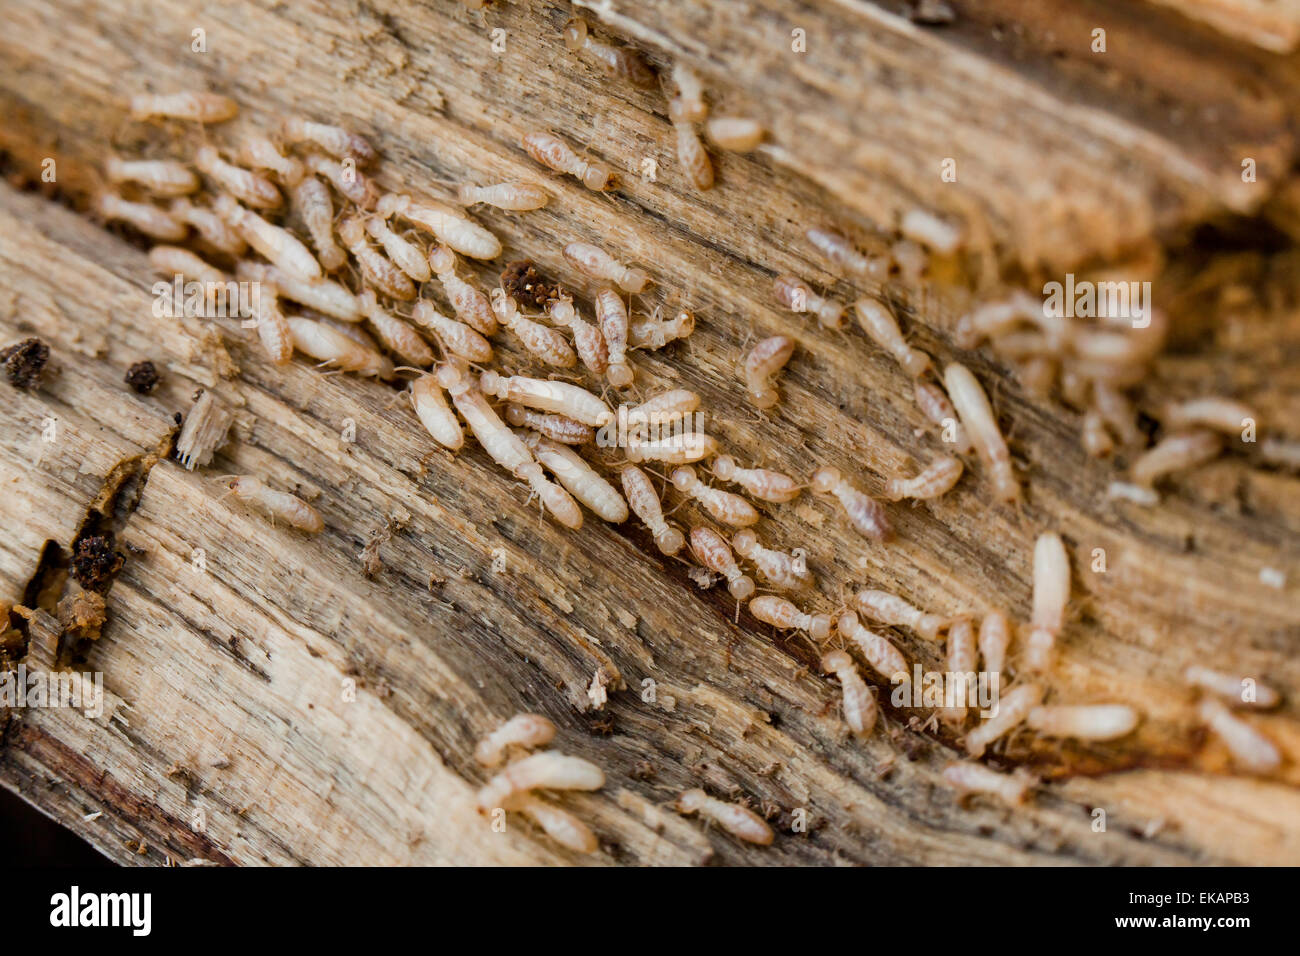 Subterranean Termite (Reticulitermes flavipes) infestation - USA Stock Photo